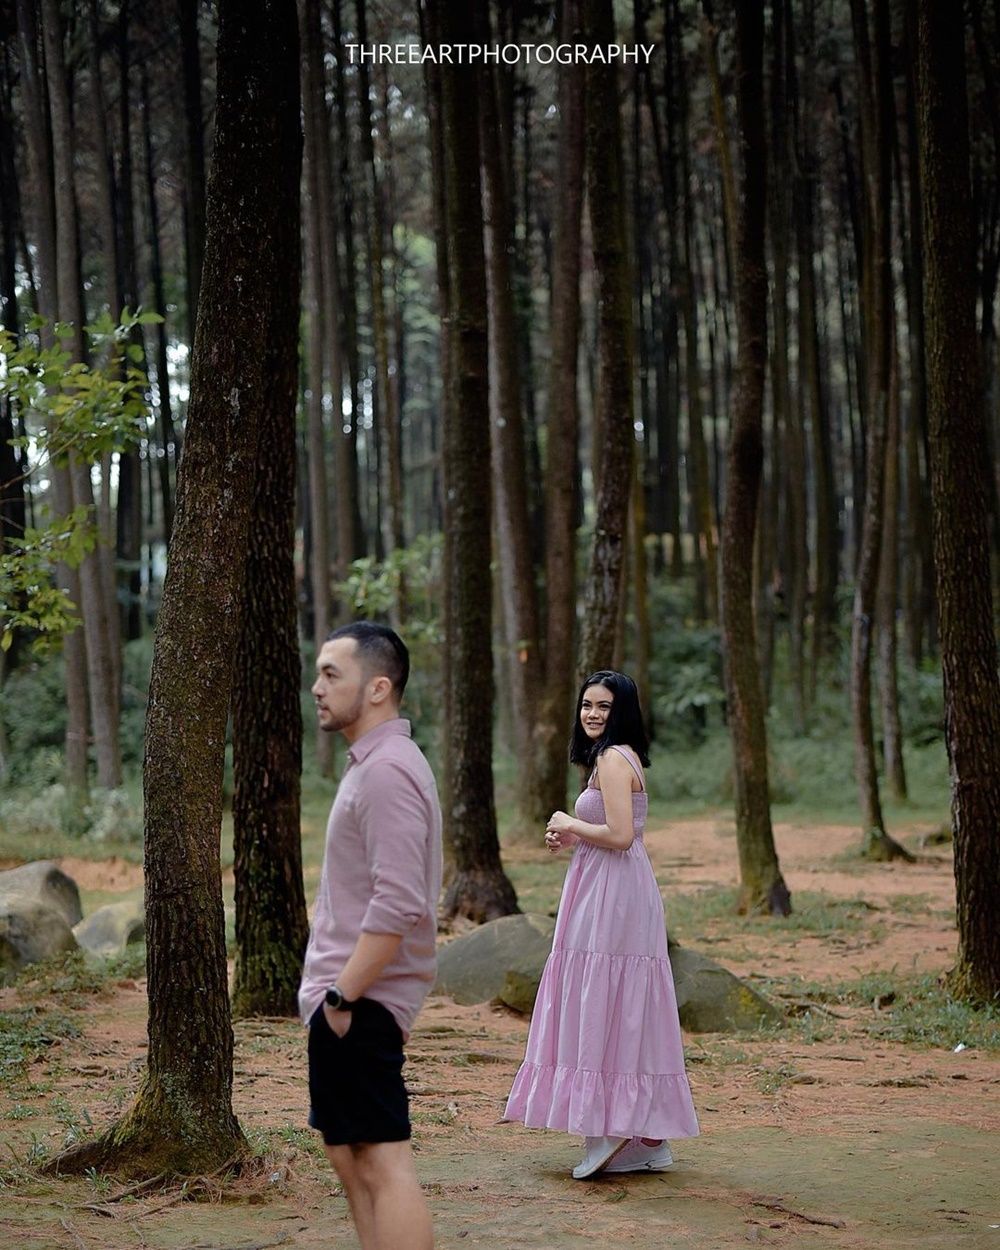 Balikan Sama Mantan, 9 Potret Perjalanan Cinta Indah Indriana & Suami